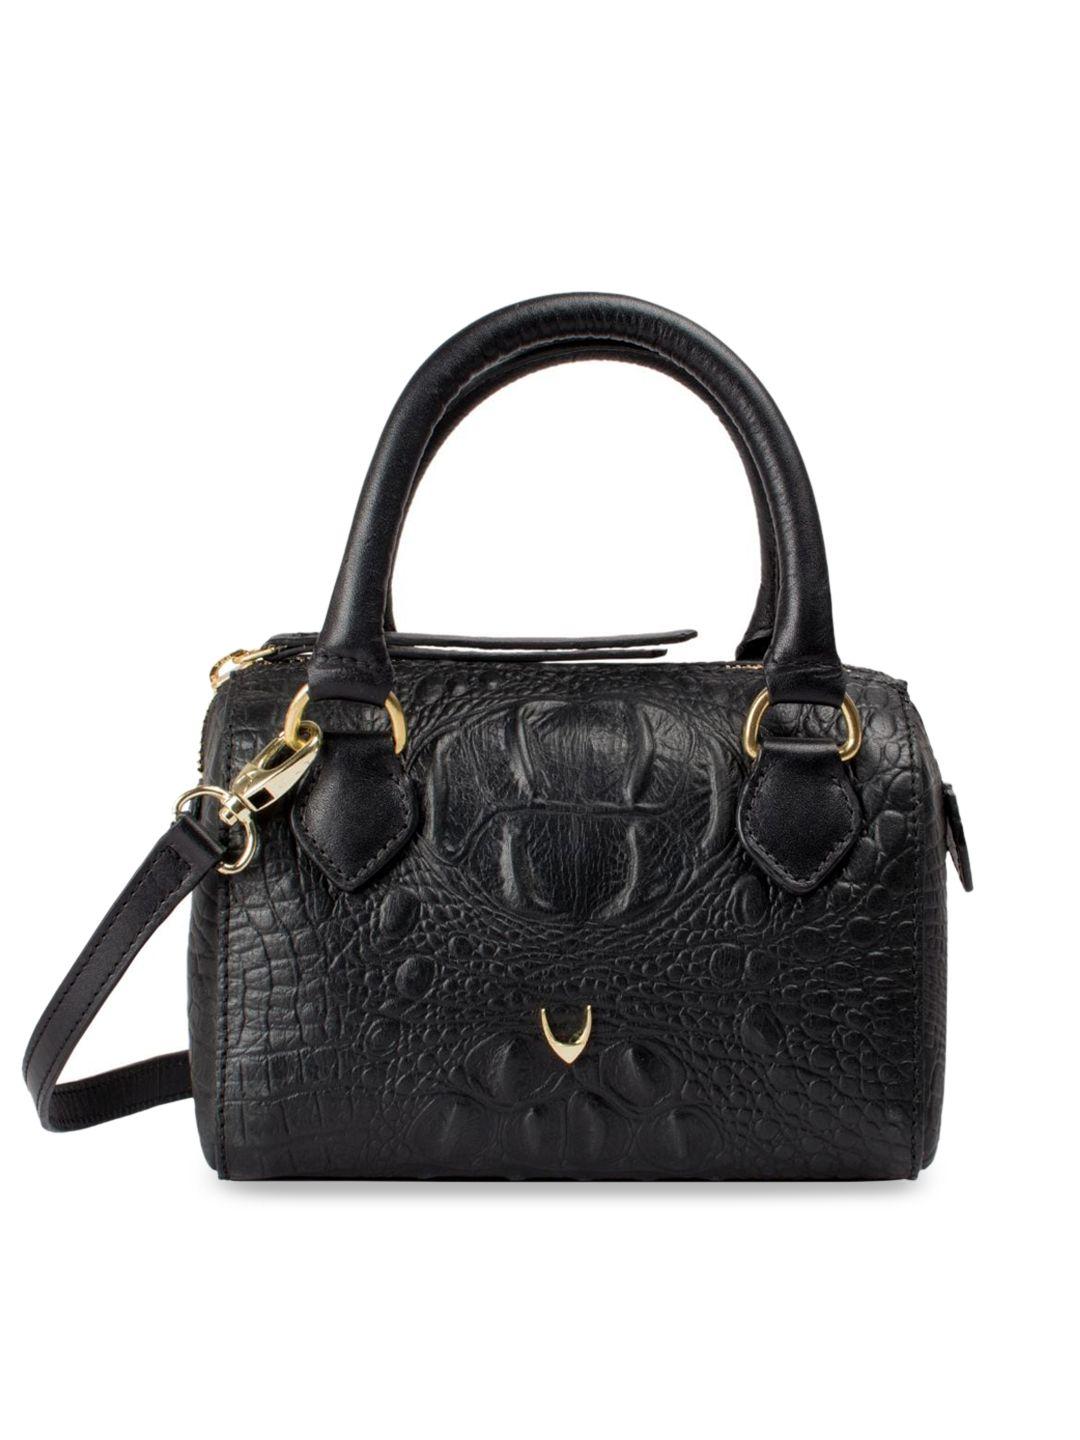 Hidesign Black Croco-Skin Textured Leather Handheld Bag